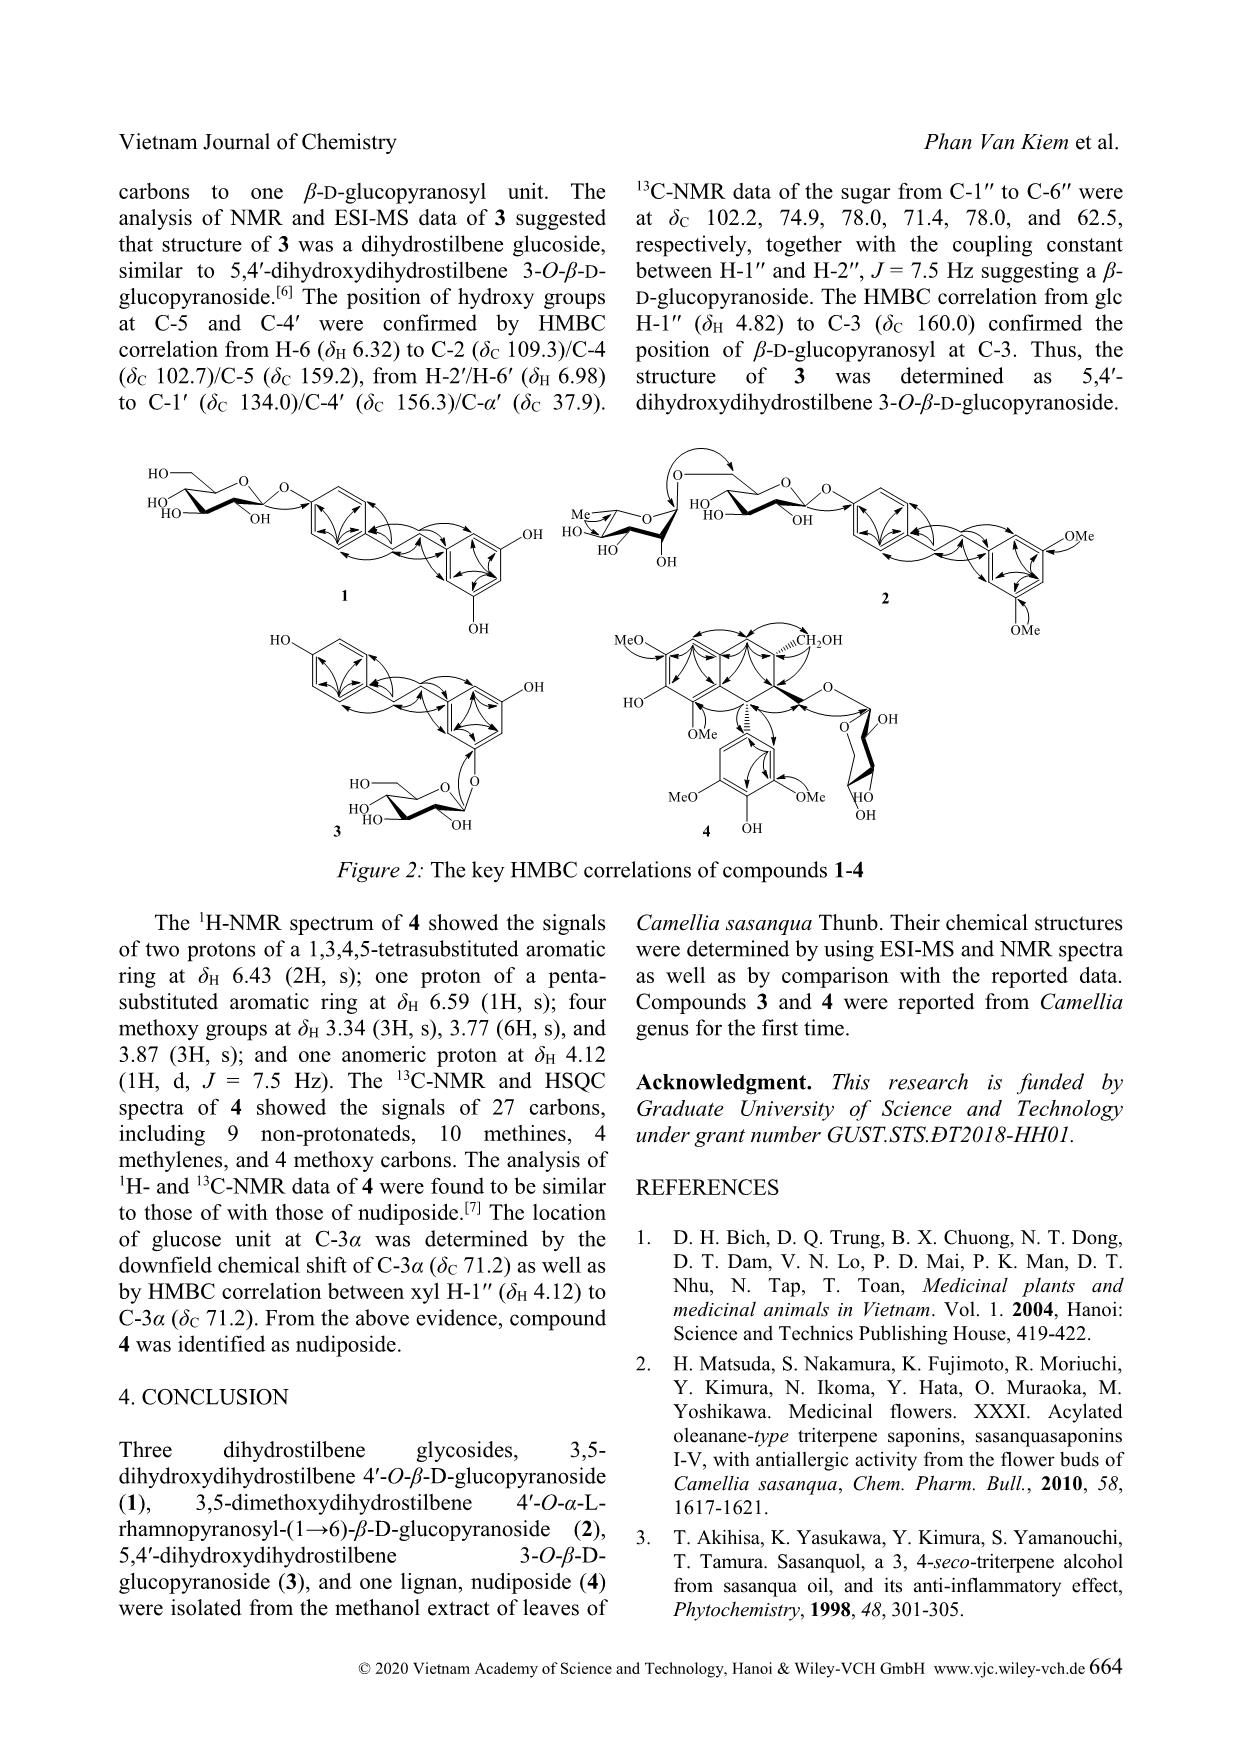 Dihydrostilbene glycosides and lignan from Camellia sasanqua trang 4